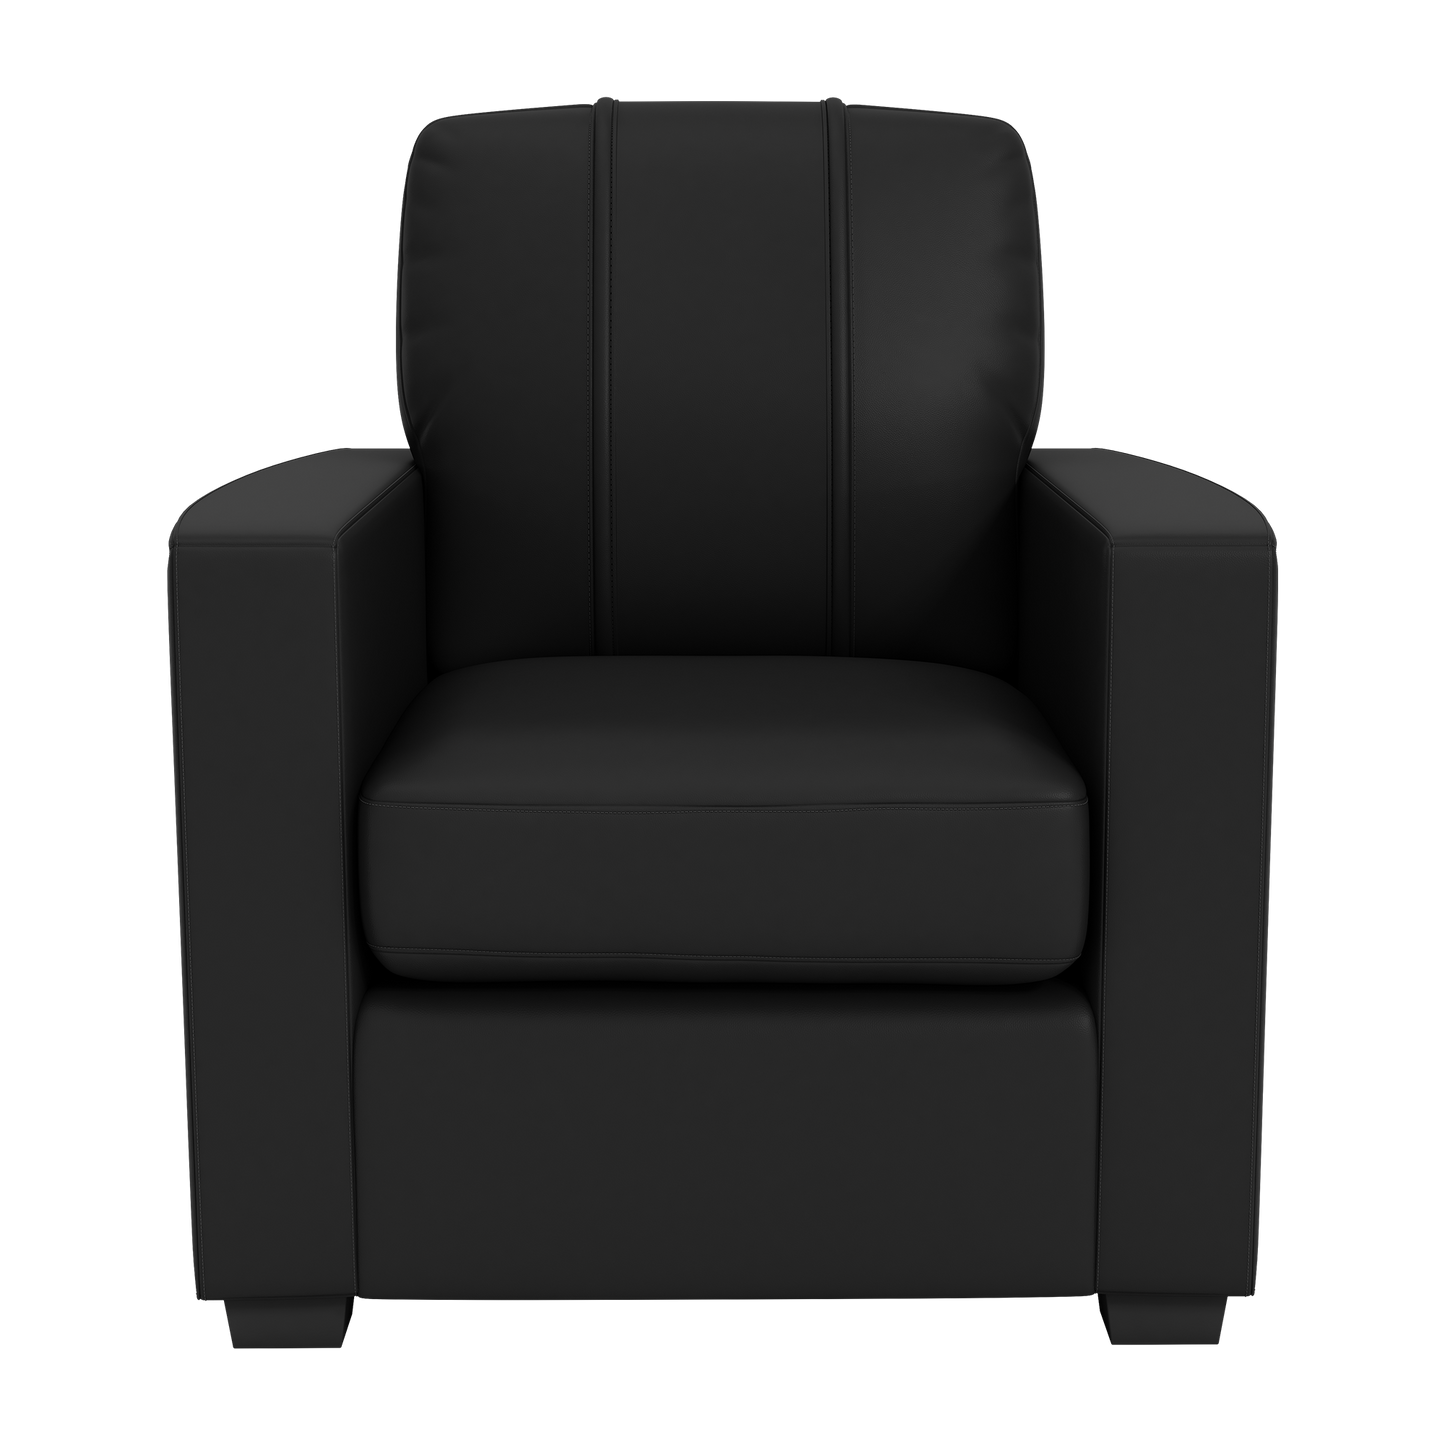 Silver Club Chair with San Francisco Giants Logo